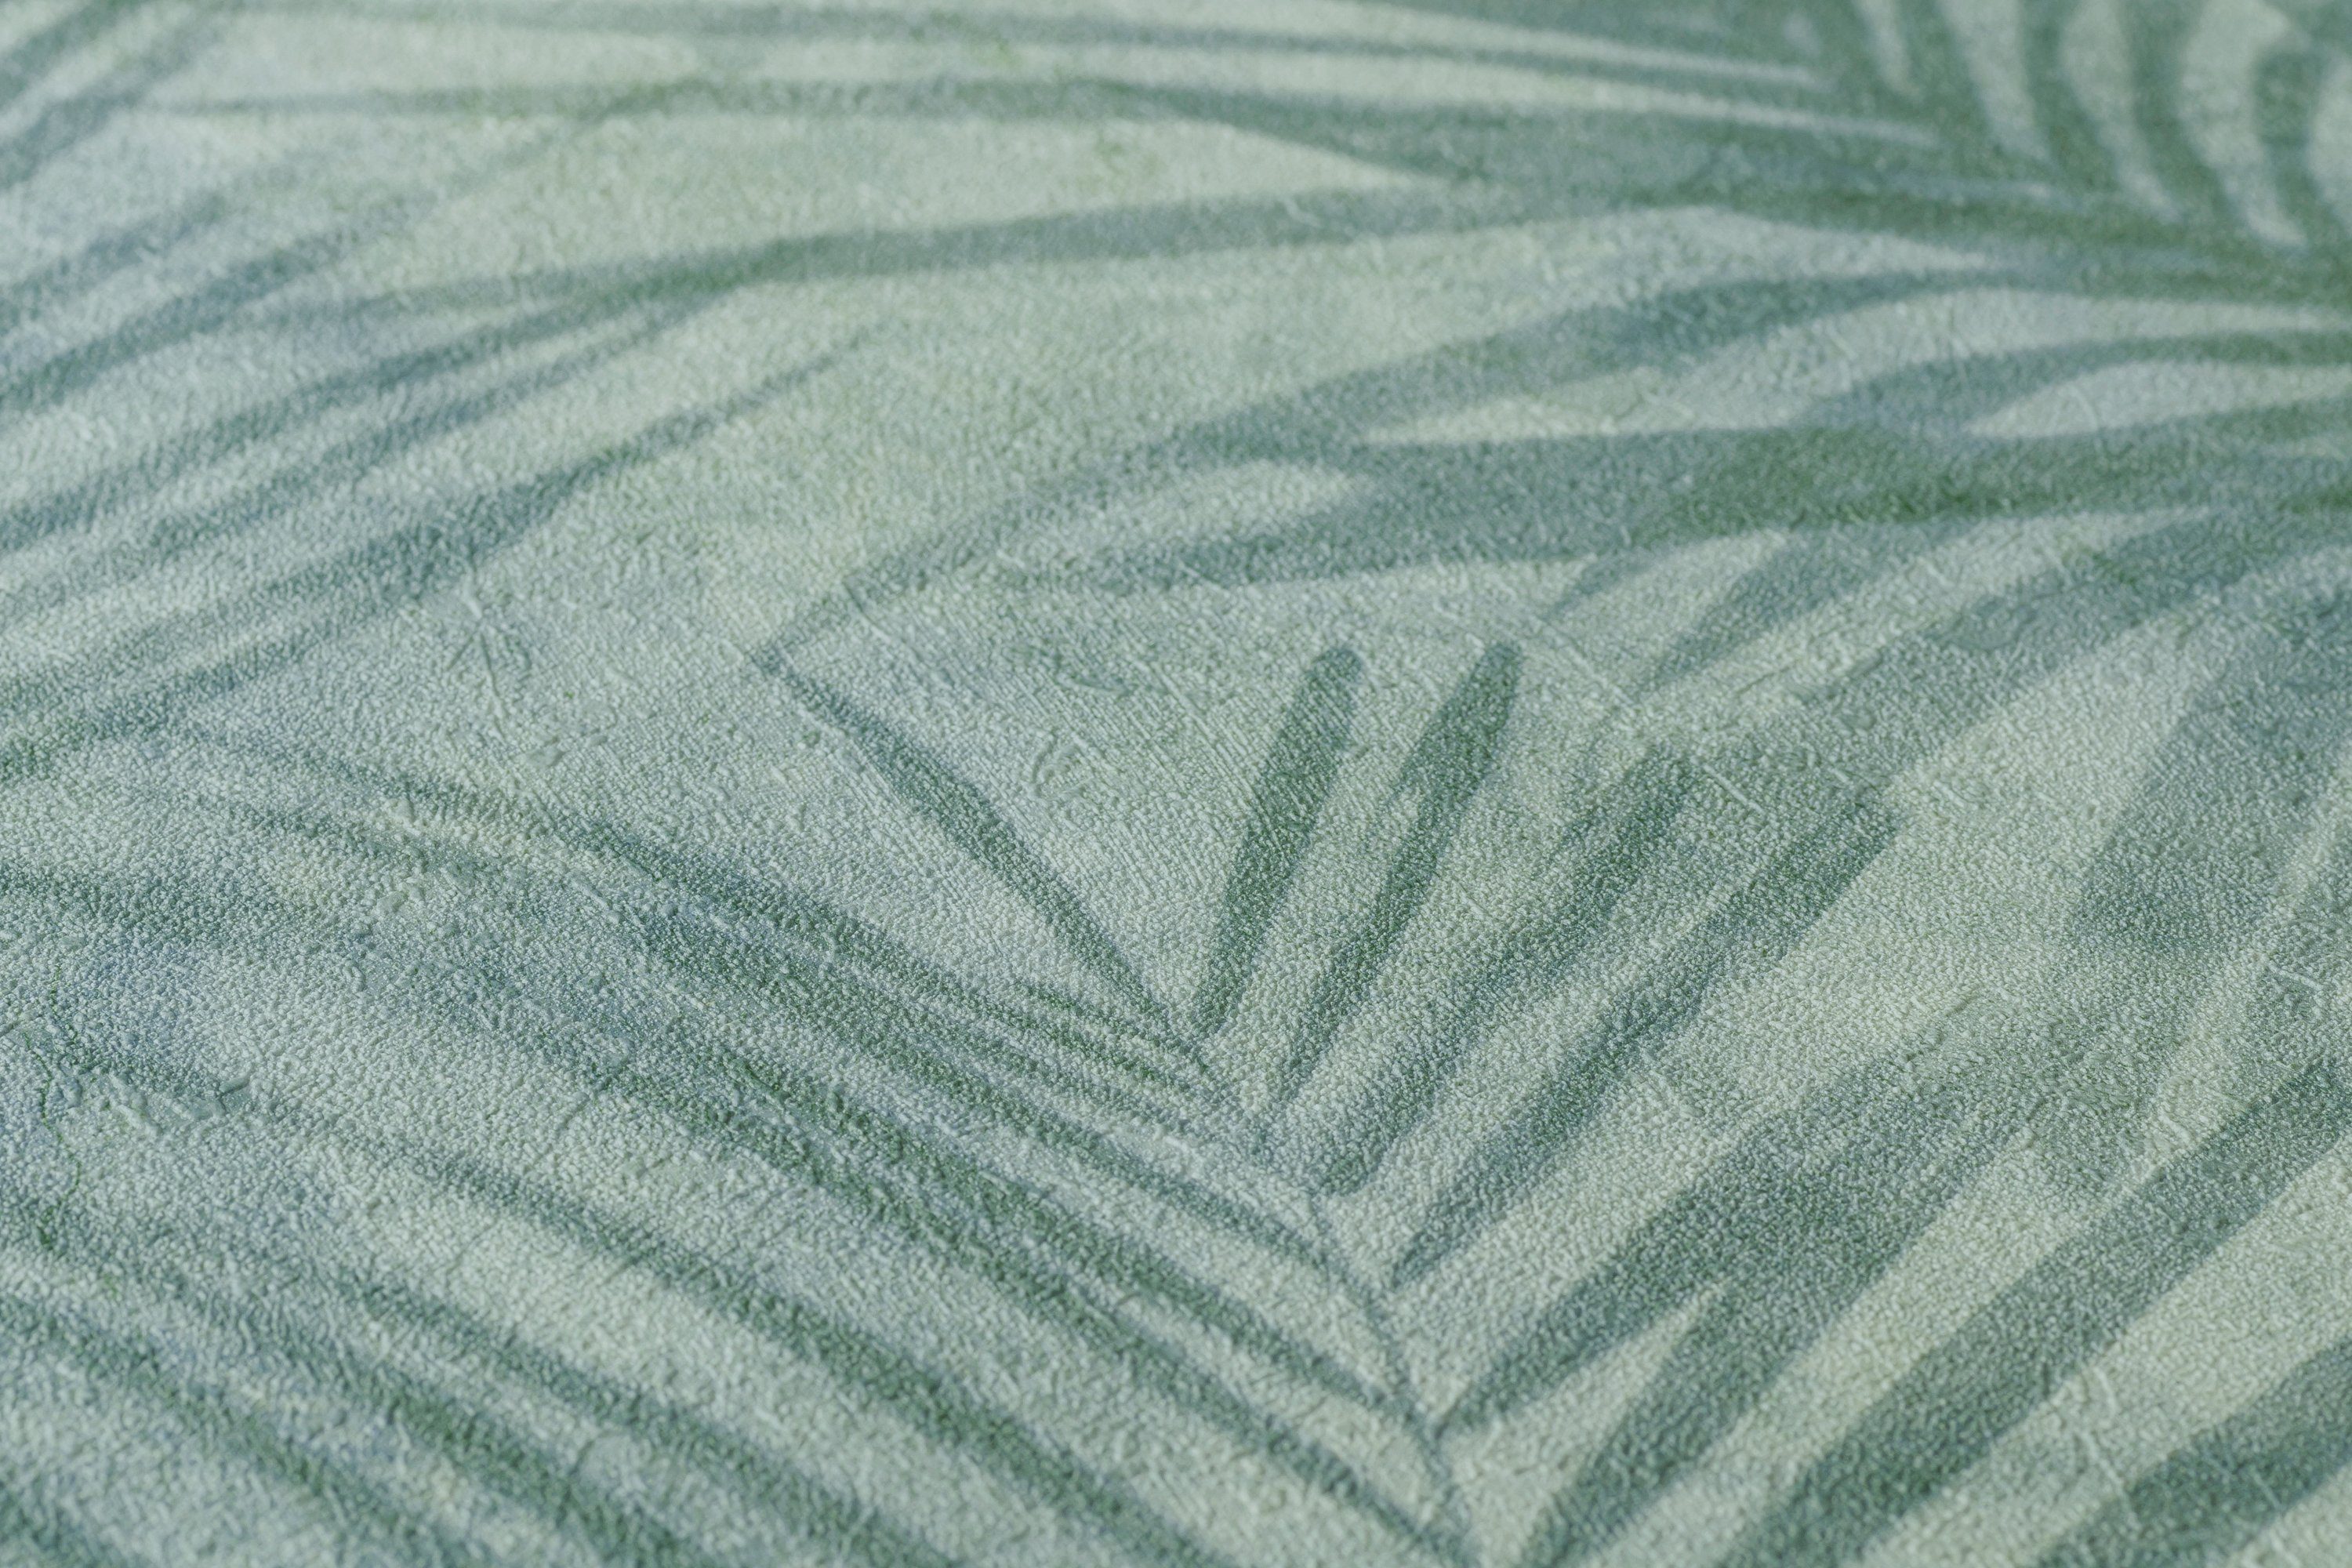 A.S. Création Vliestapete Neue Bude mit floral, 2.0 grün/grau Dschungeltapete Palmen Concret Tapete Tropical Palmenblättern